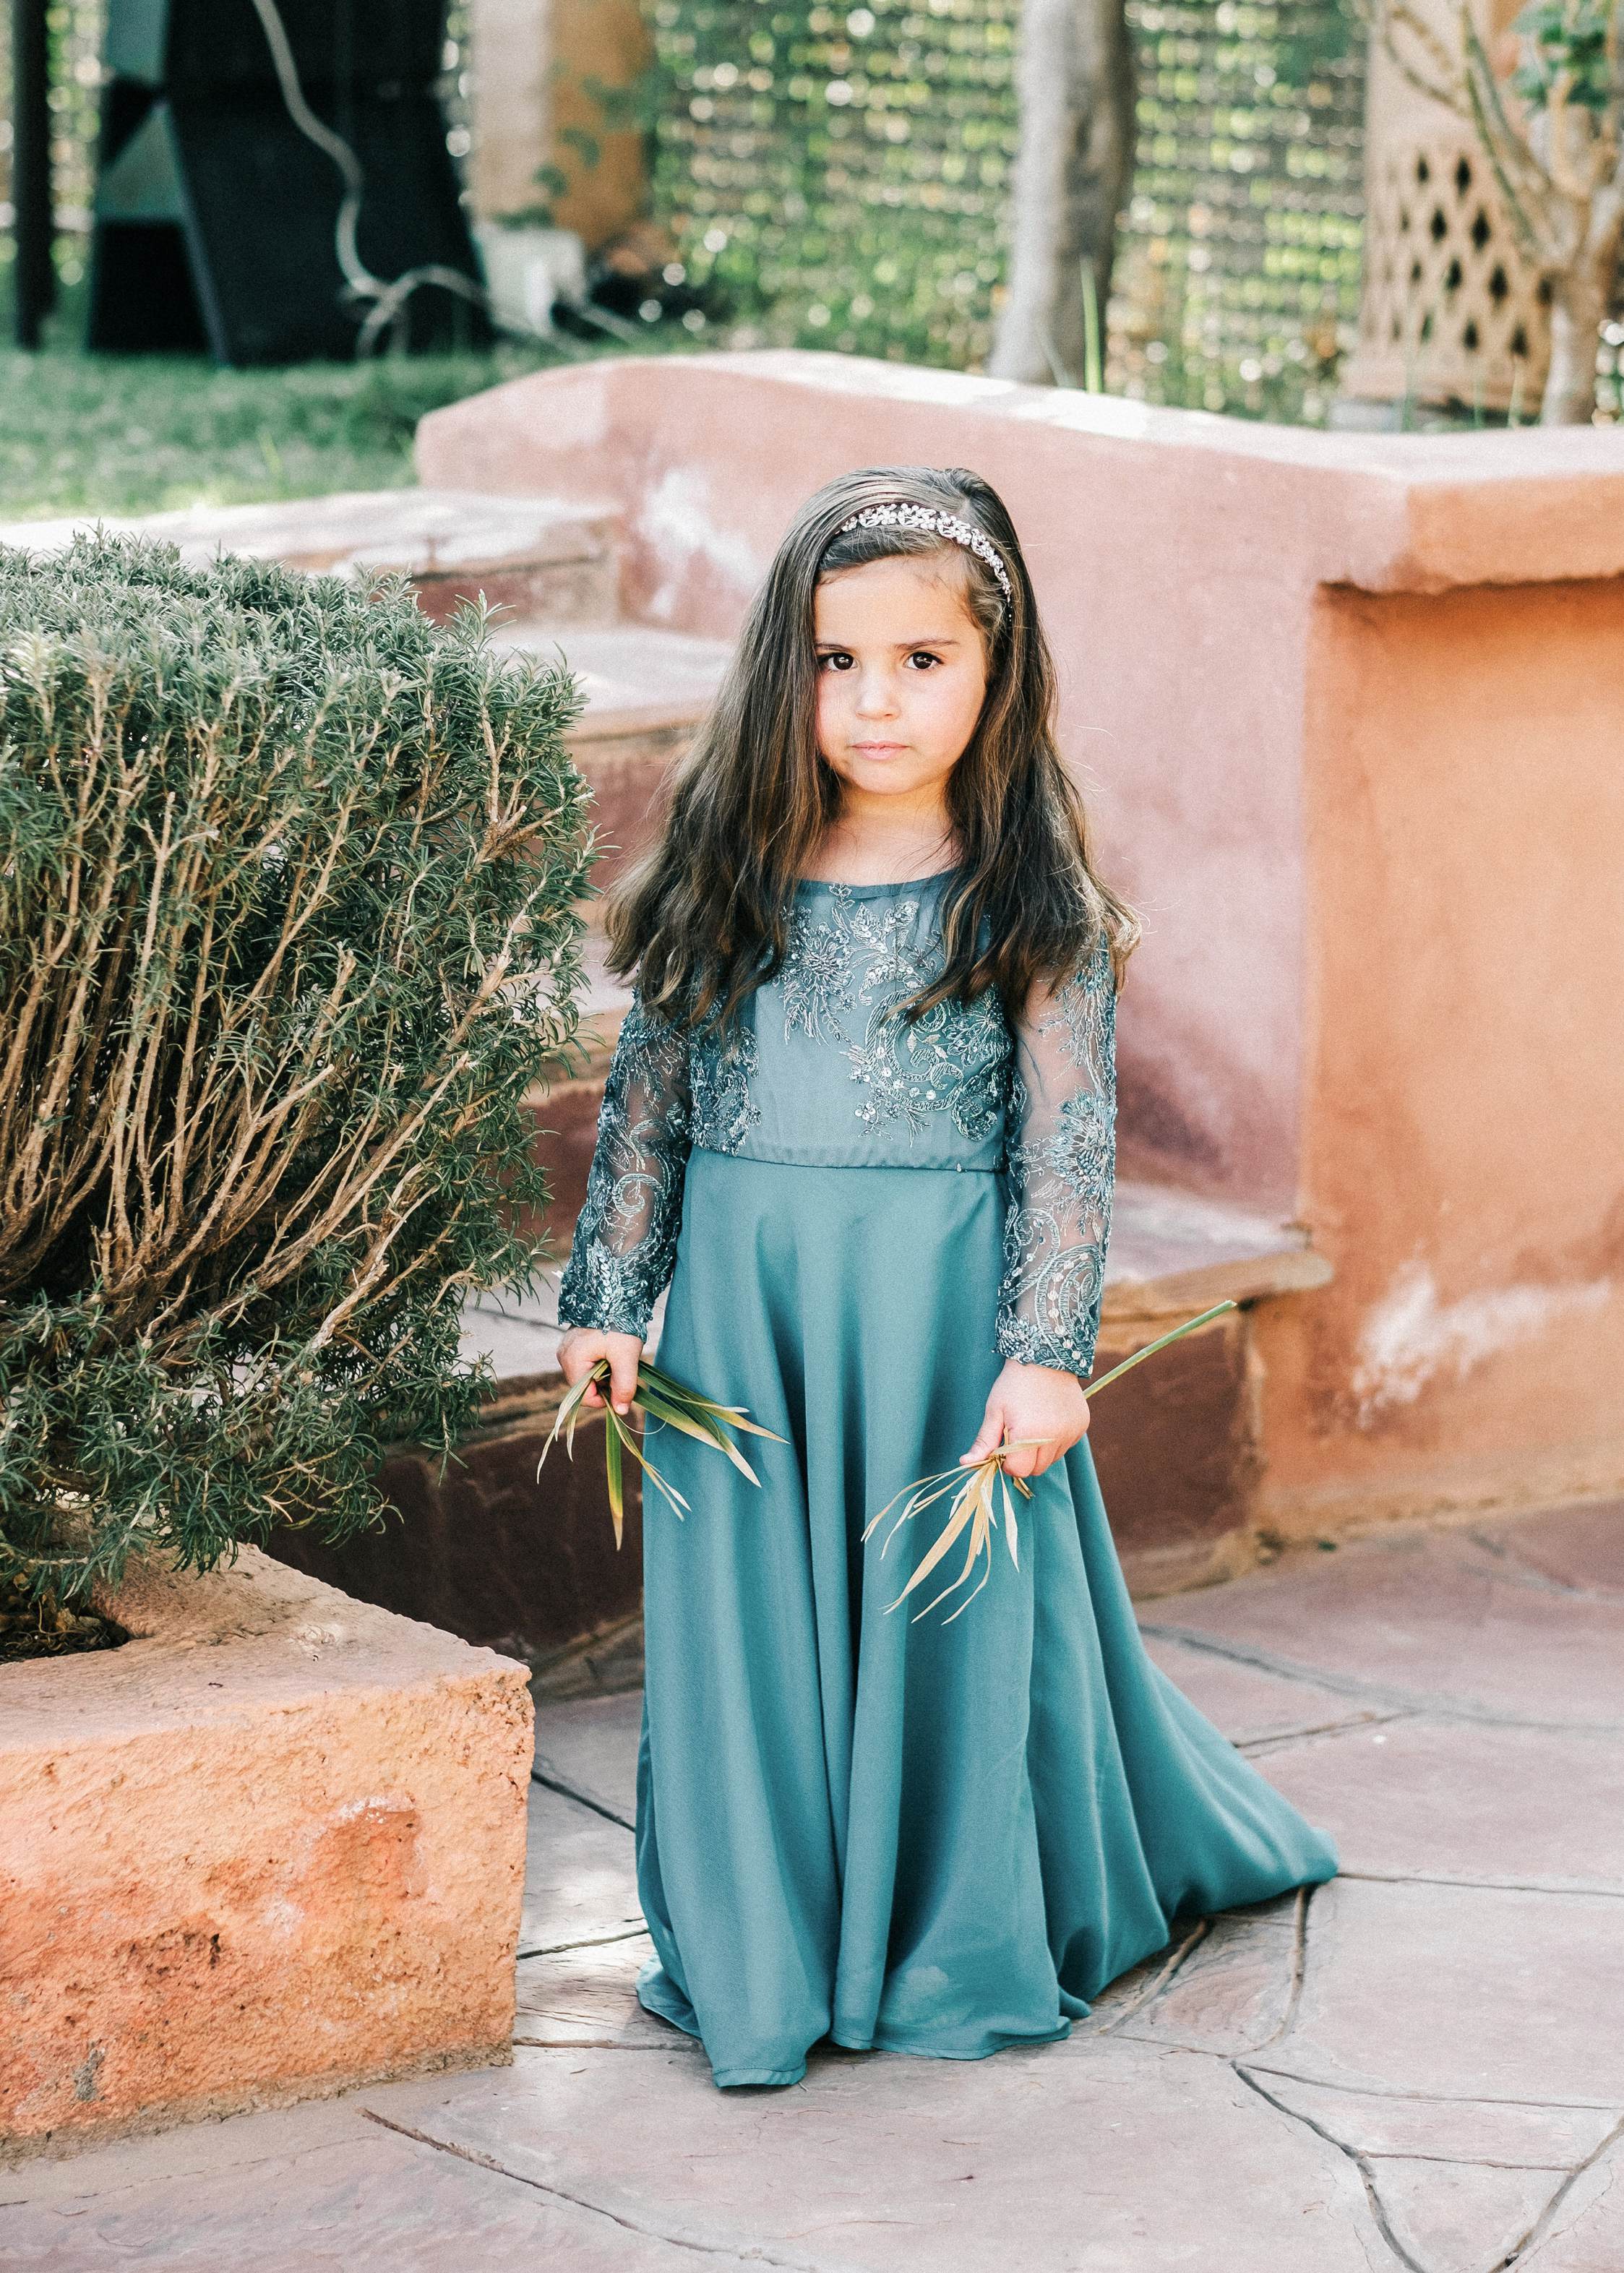 Wedding photographer Marrakech Morocco - Flowergirl